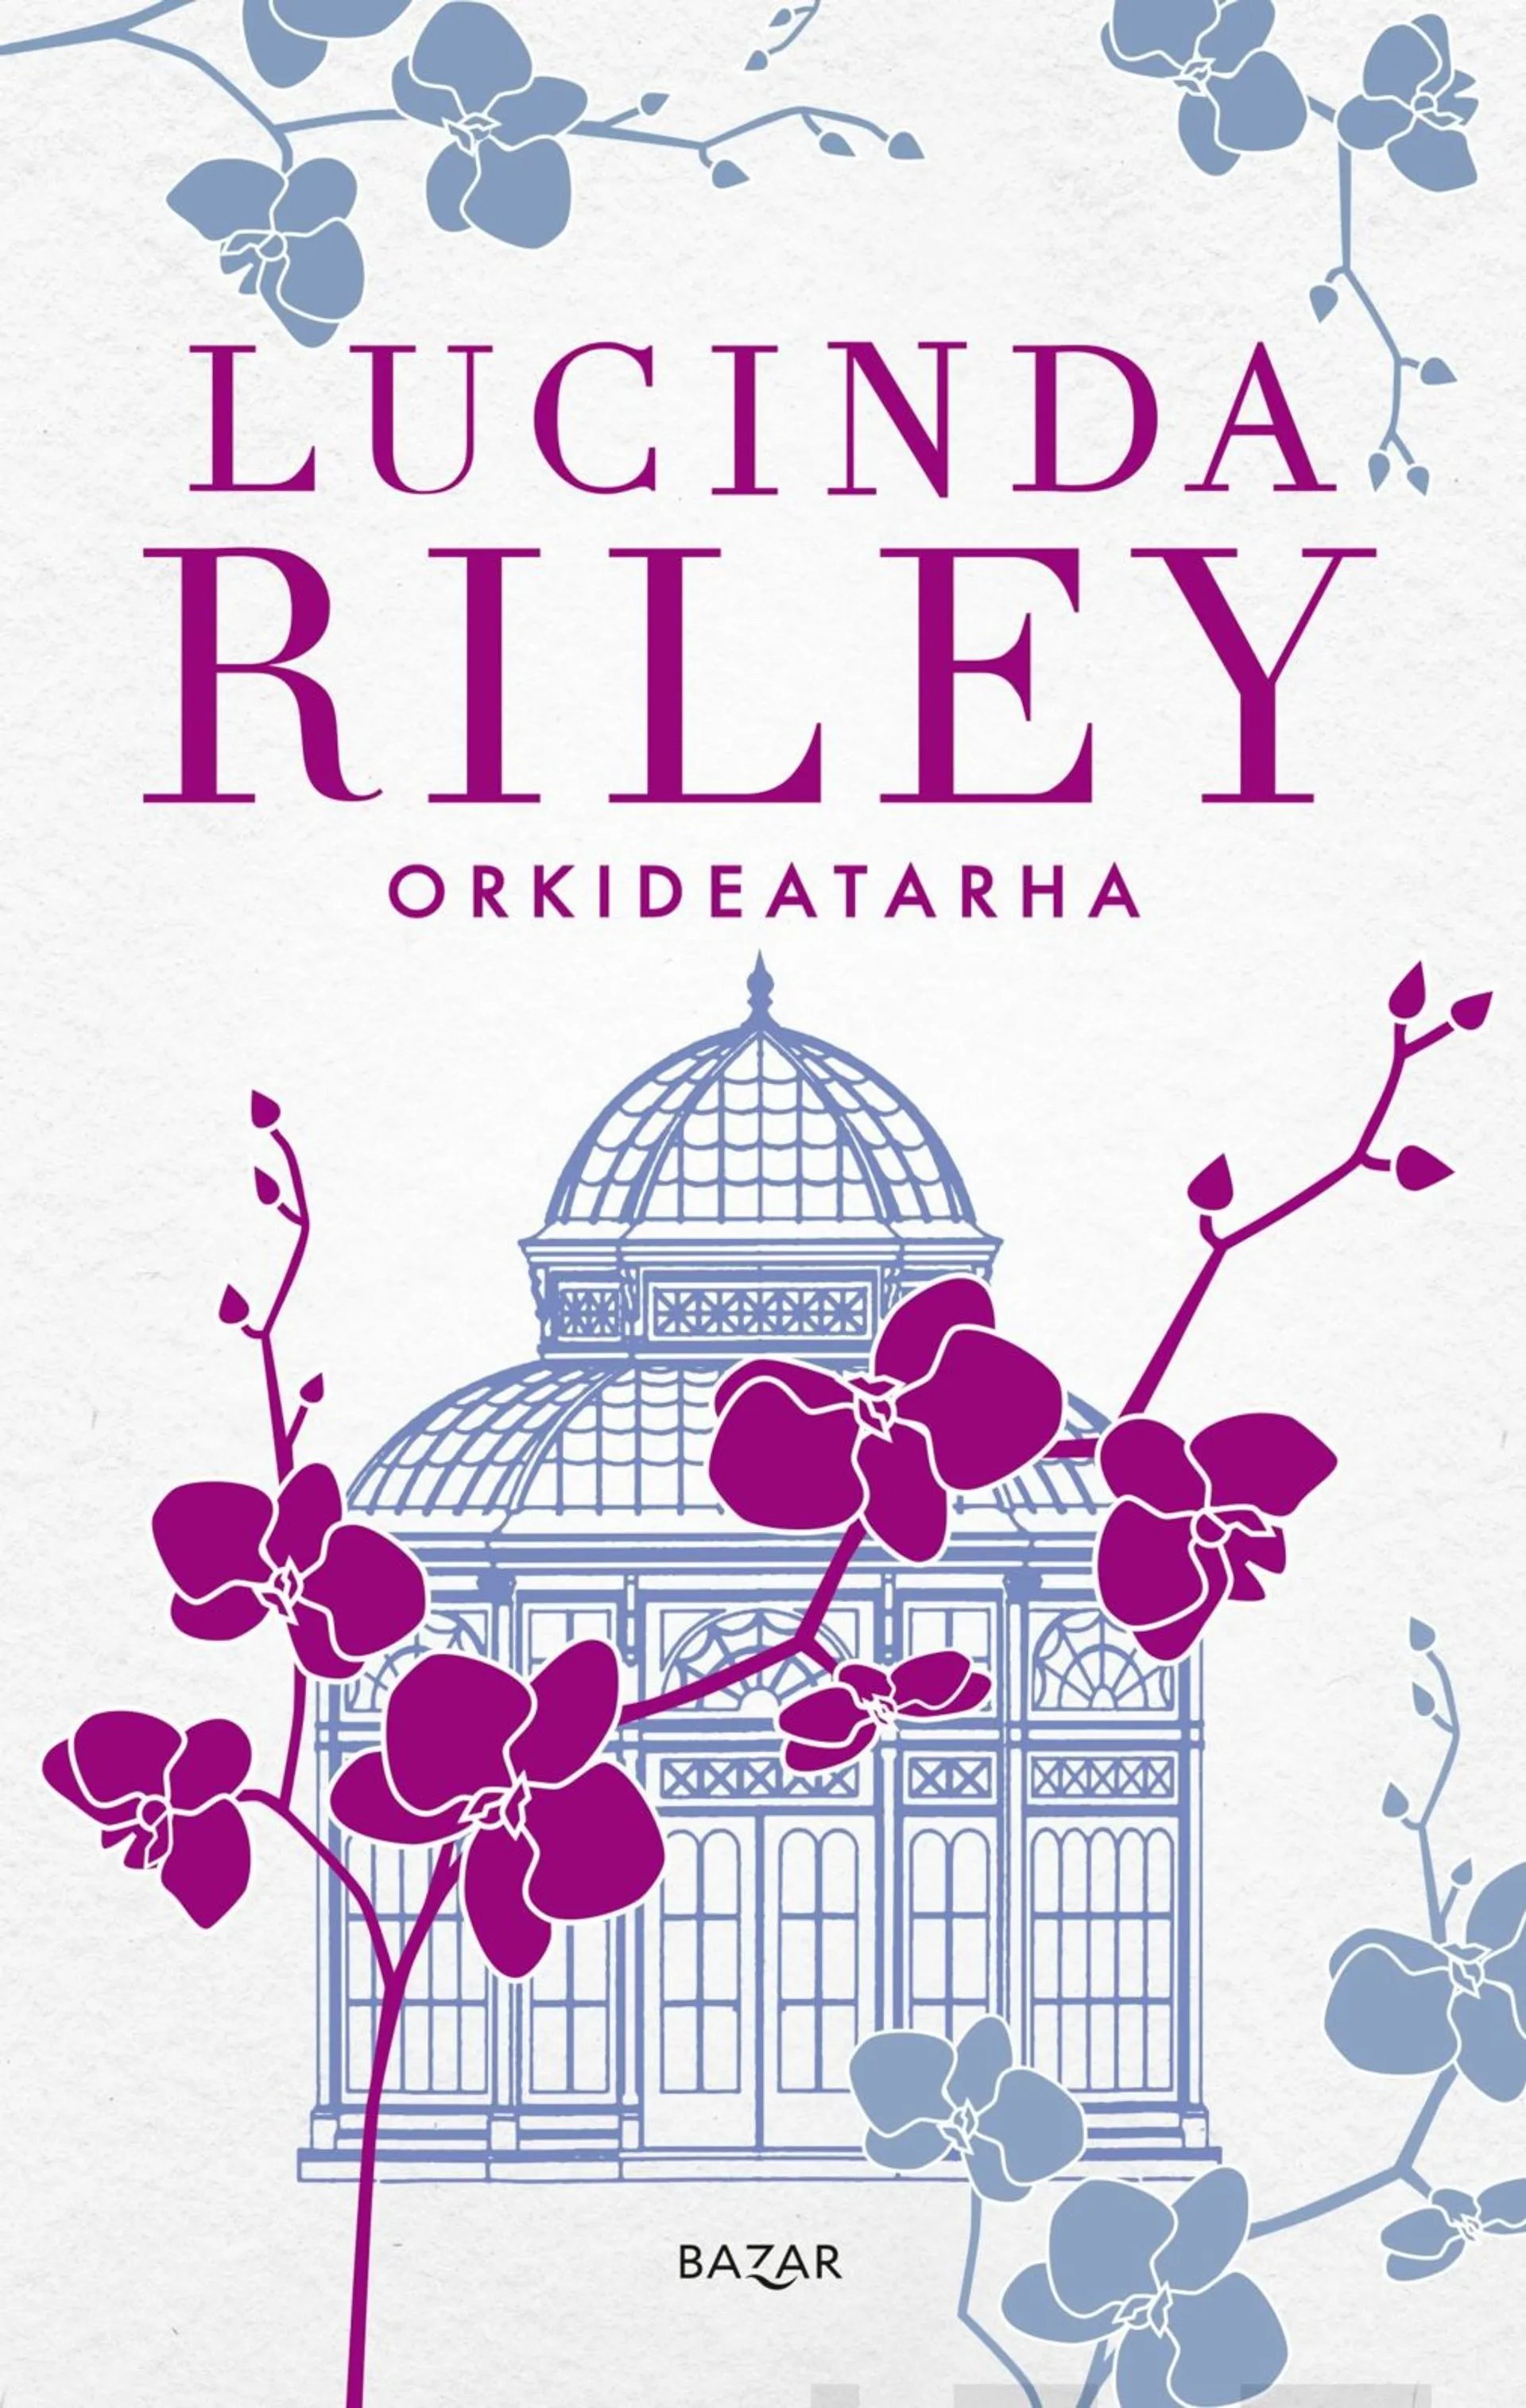 Riley, Orkideatarha